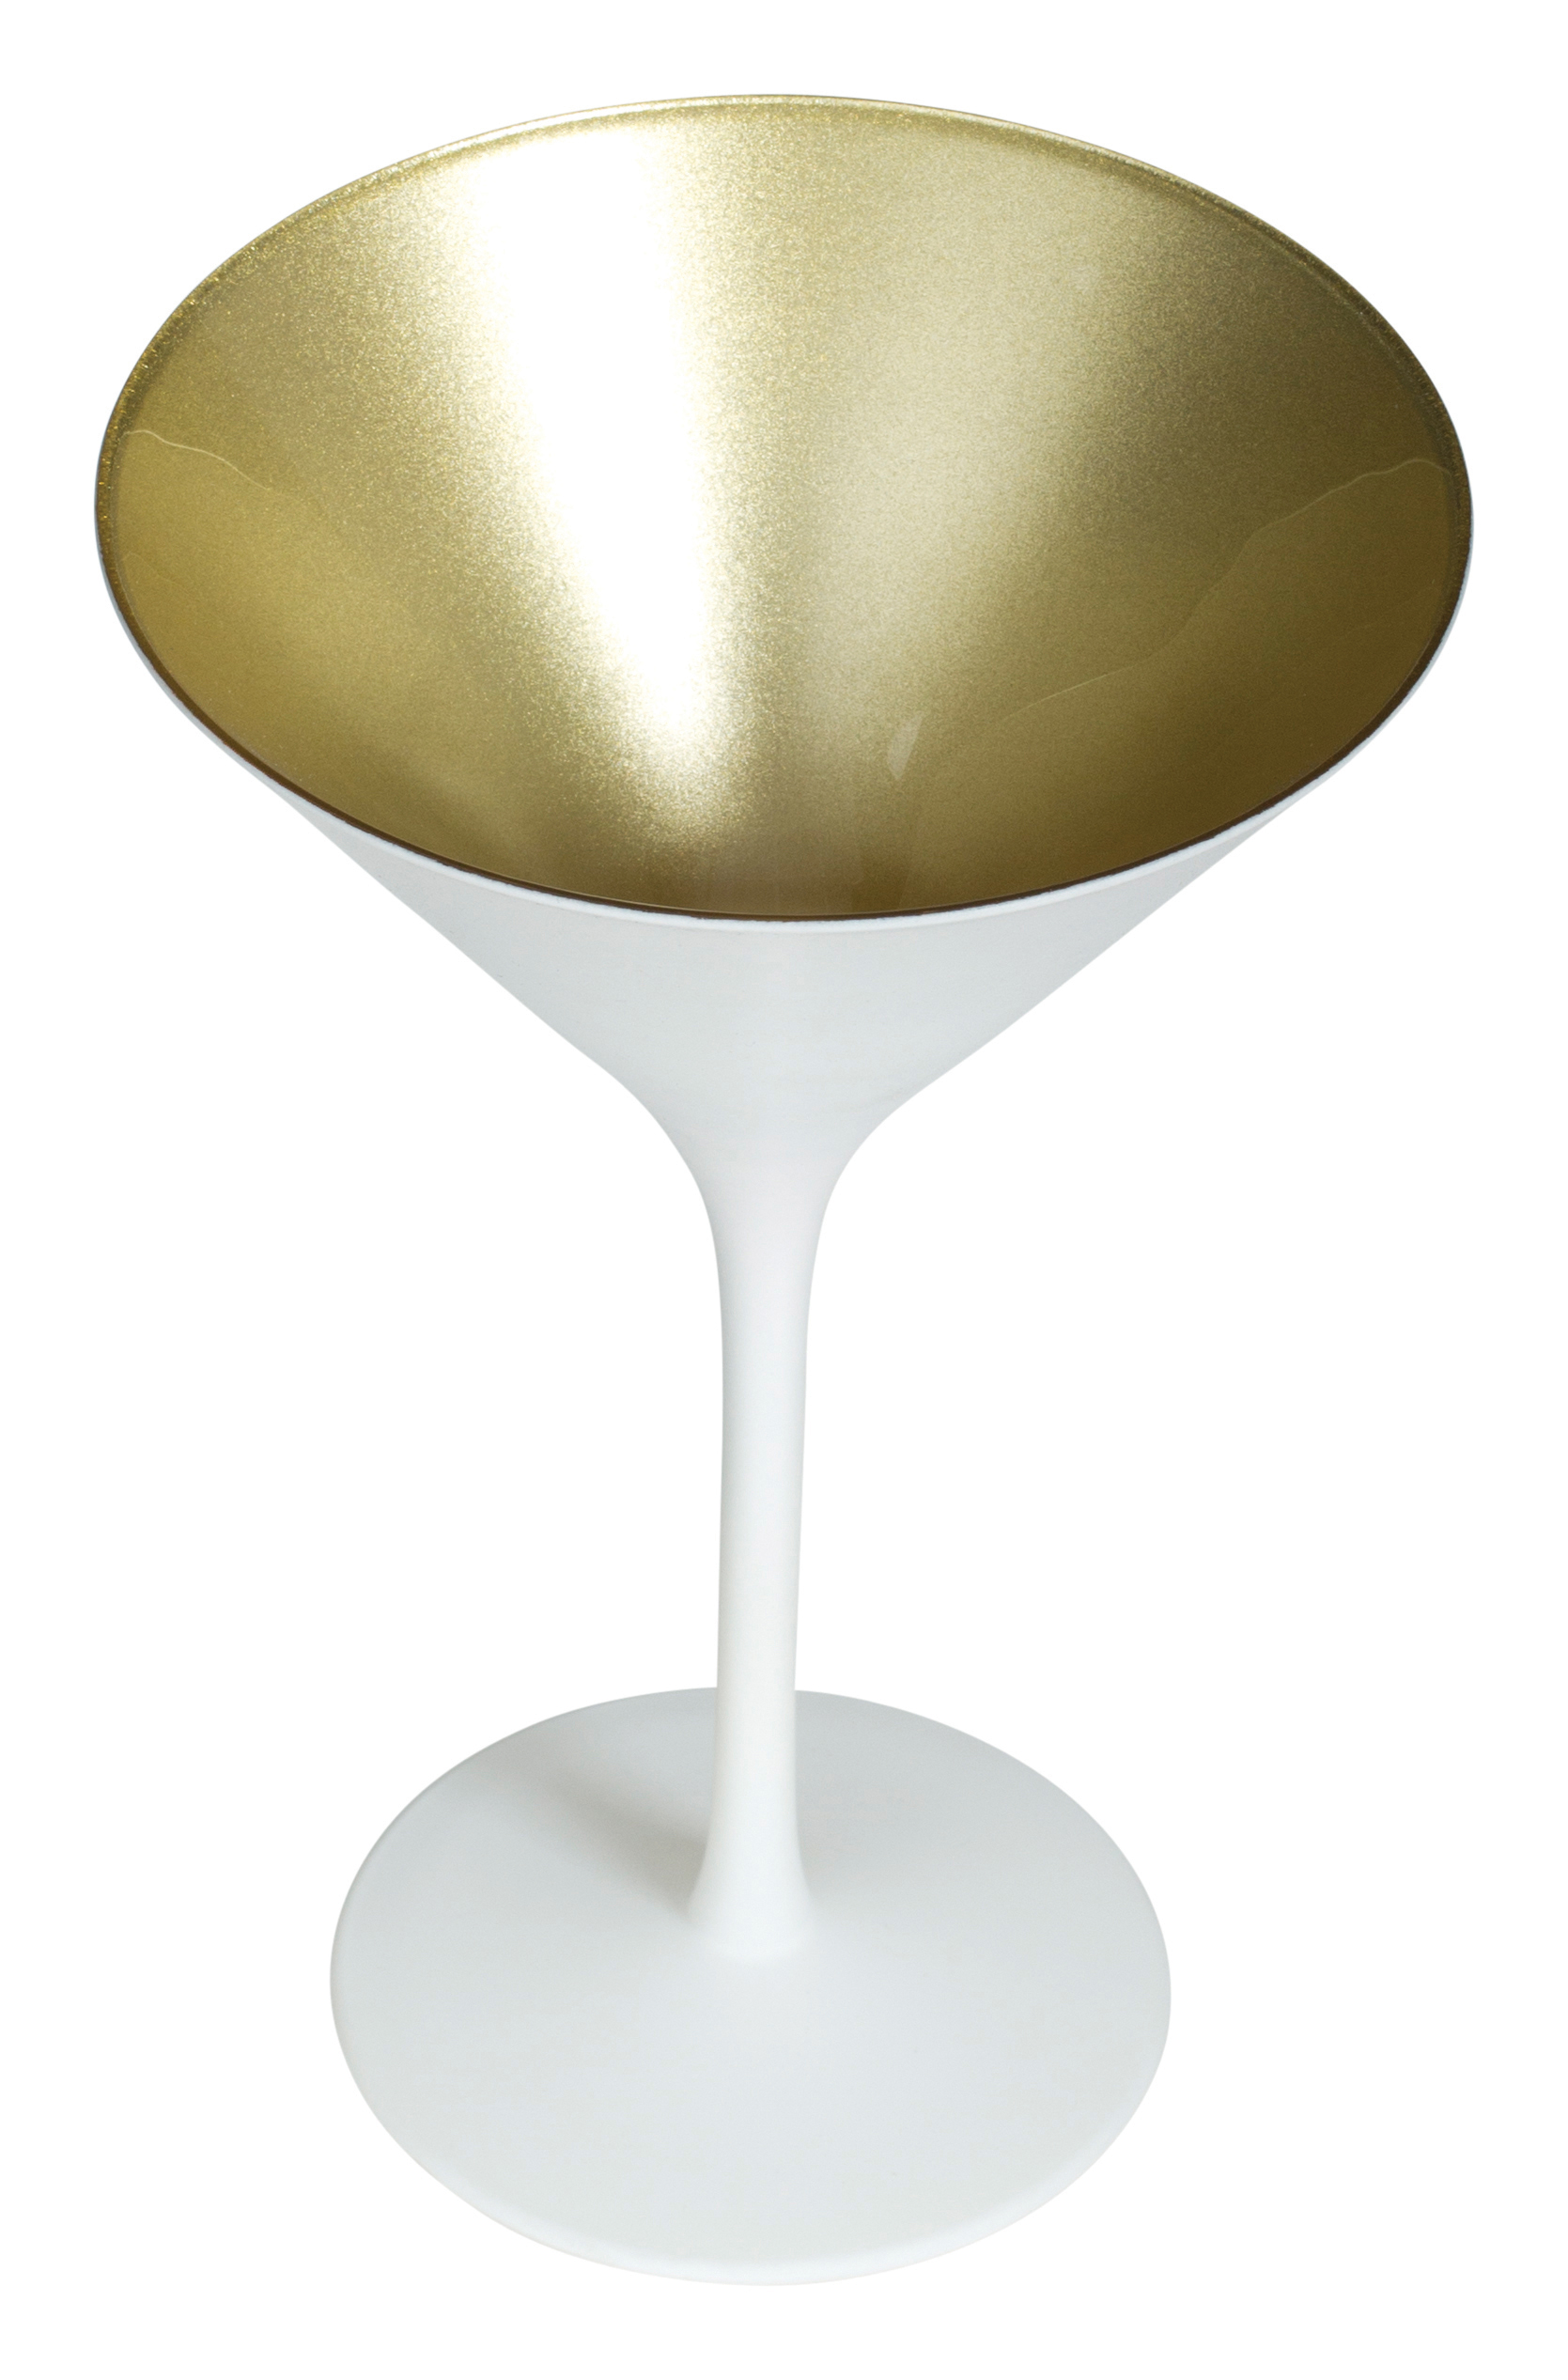 Martiniglas, matt weiß/gold, Elements Stölzle - 240ml (1 Stk.)